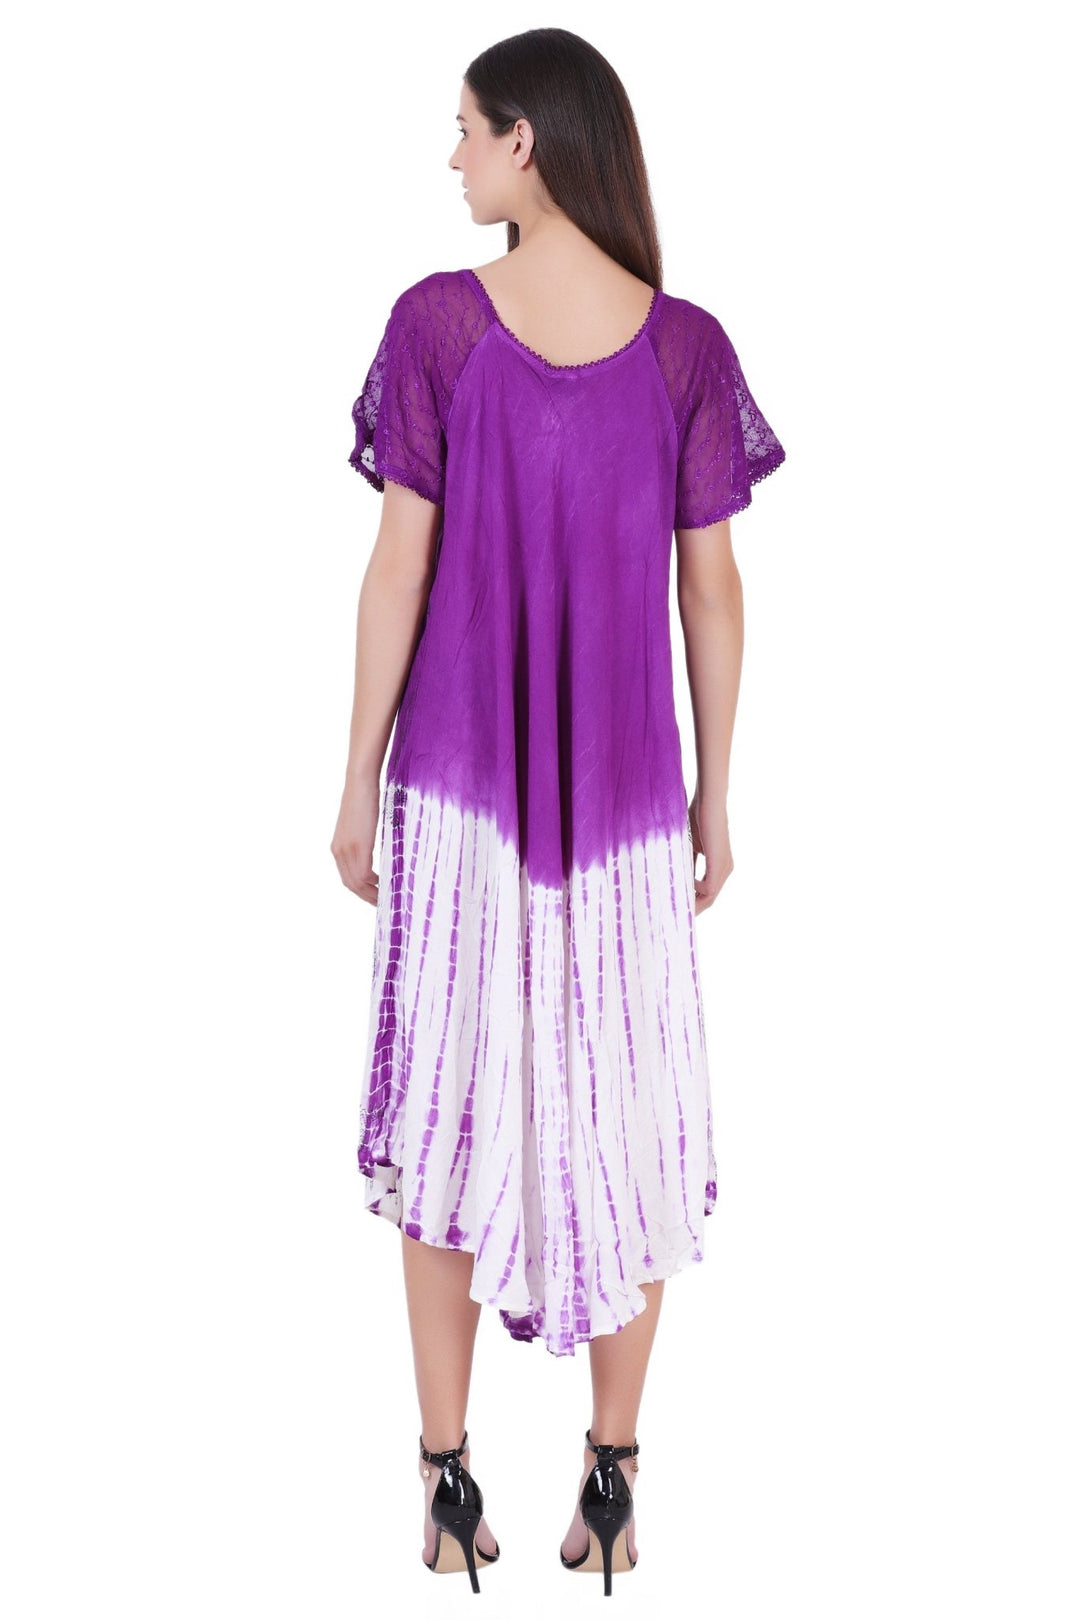 Palm Tree Block Print Tie Dye Dress 18603 - Advance Apparels Inc